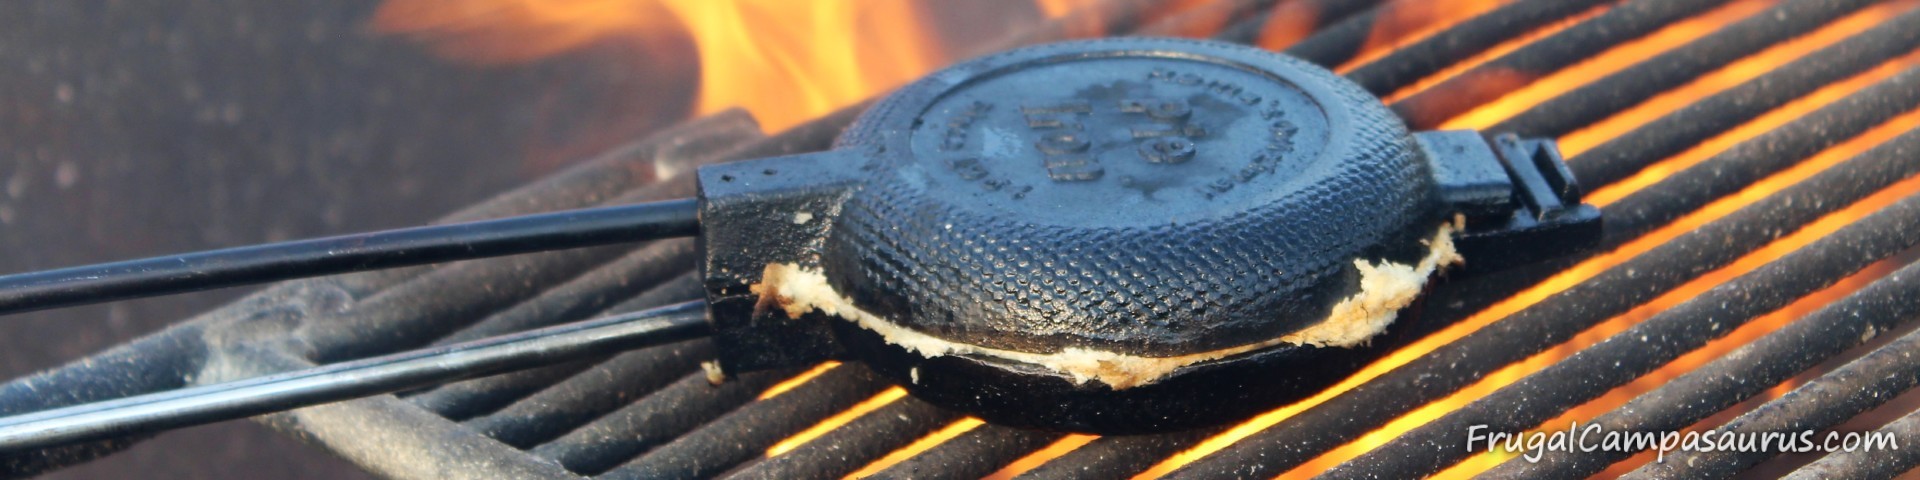 Campfire pie irons hit different. : r/castiron